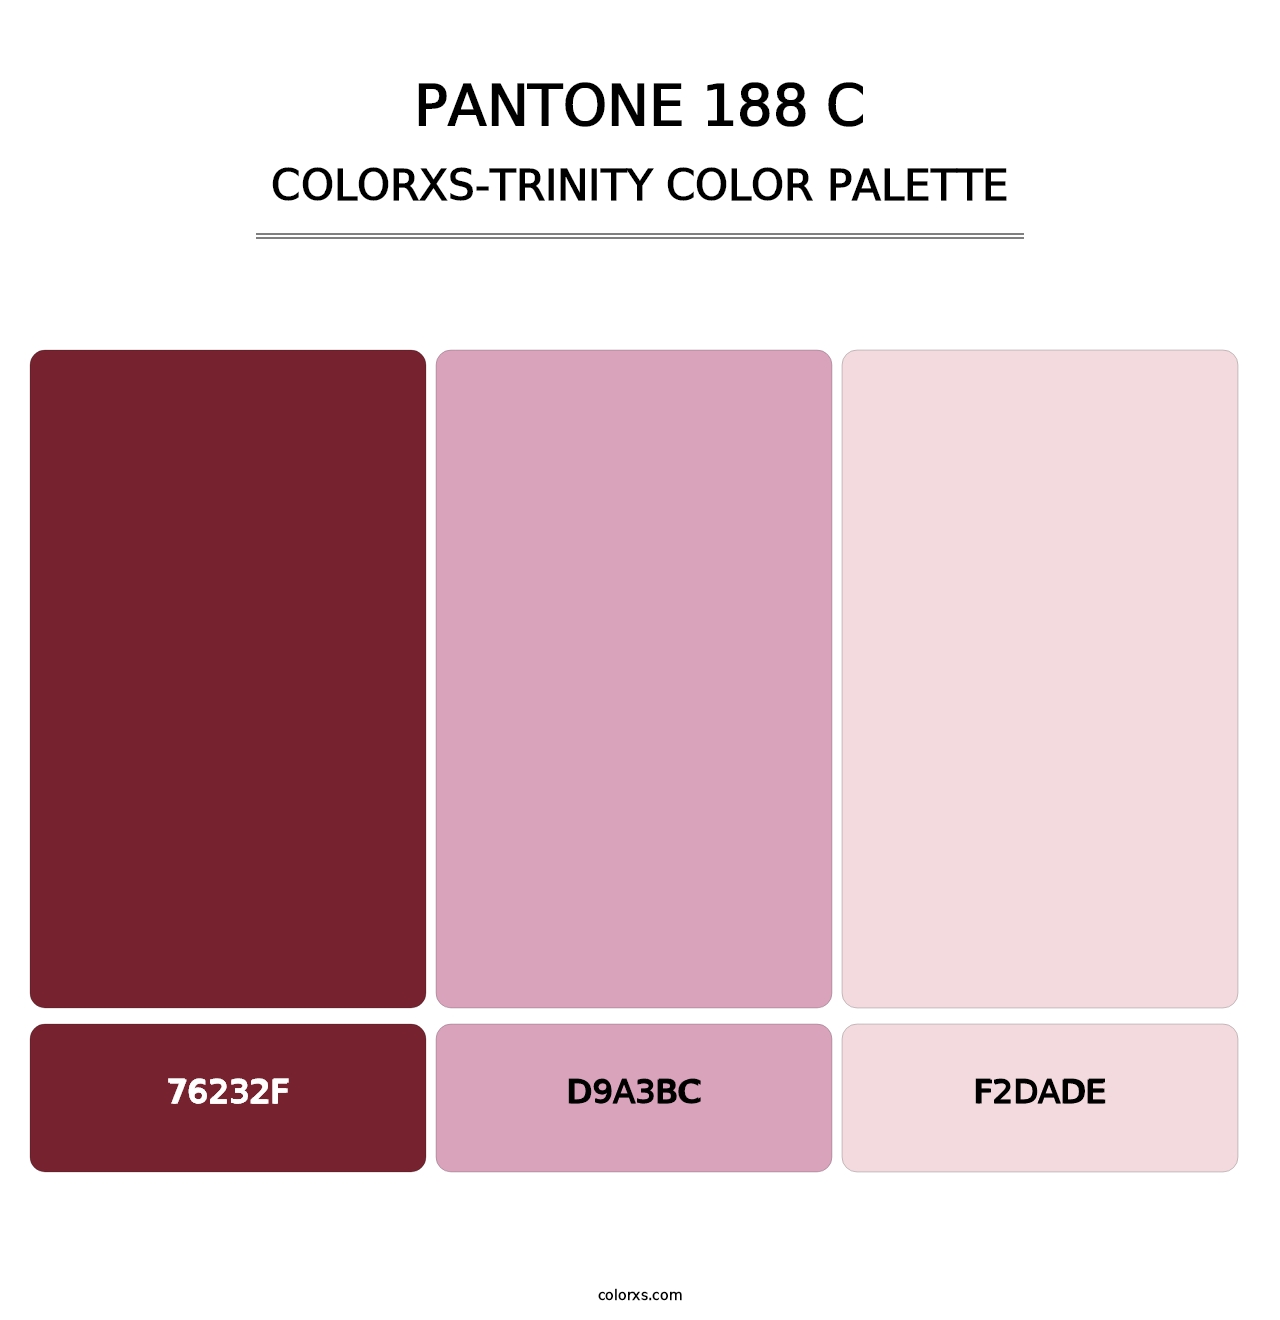 PANTONE 188 C - Colorxs Trinity Palette